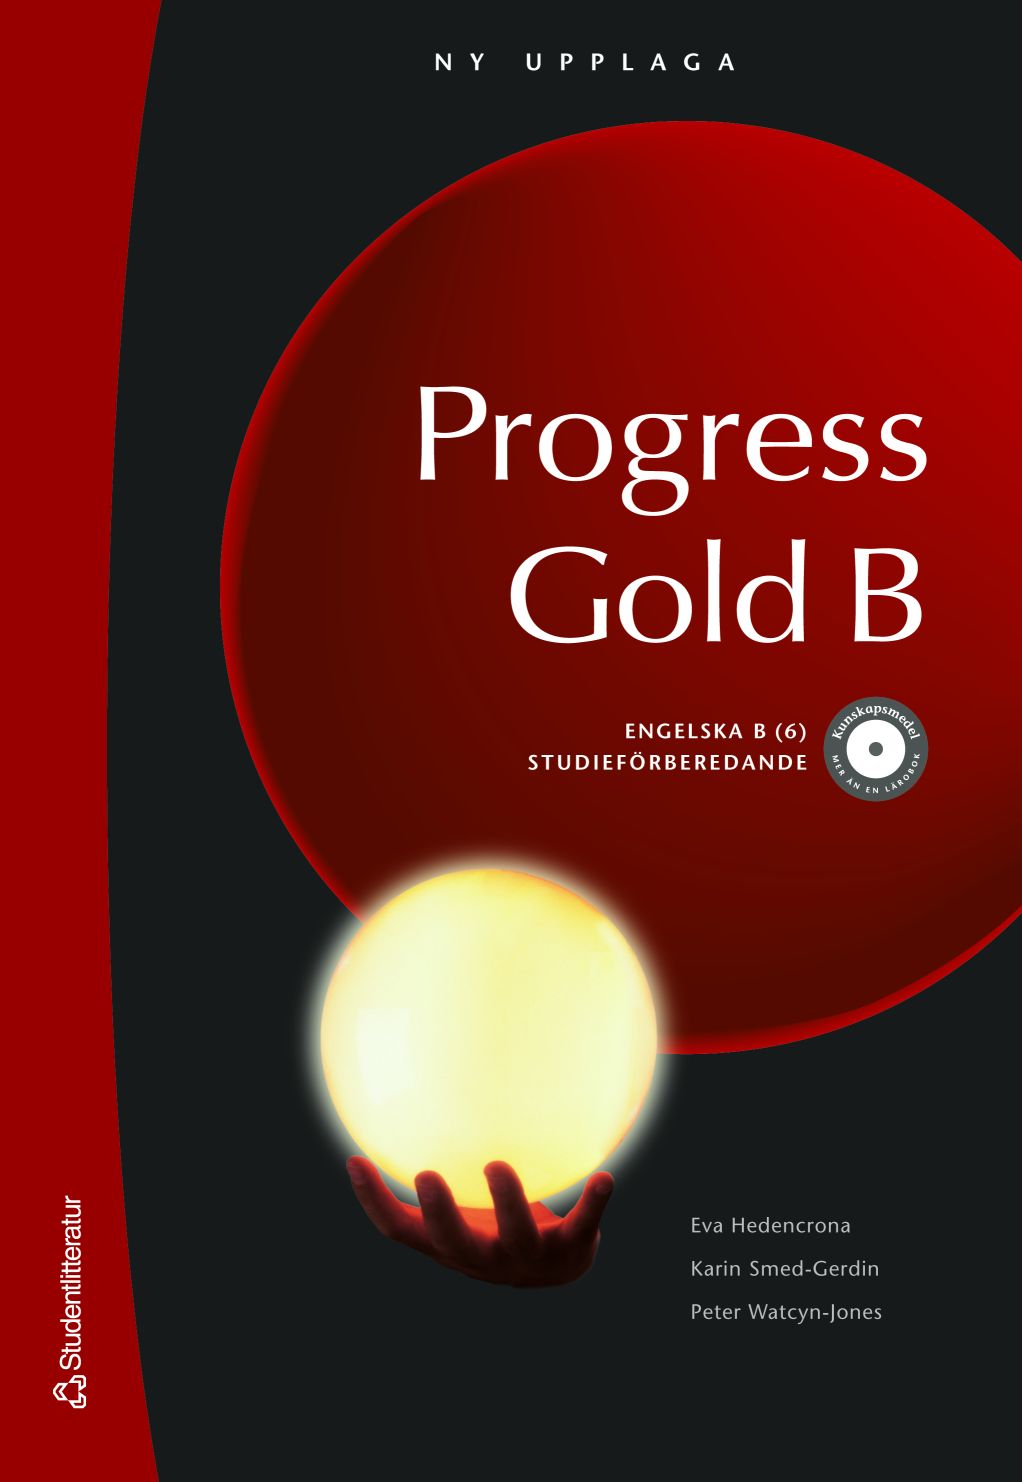 Progress Gold B.